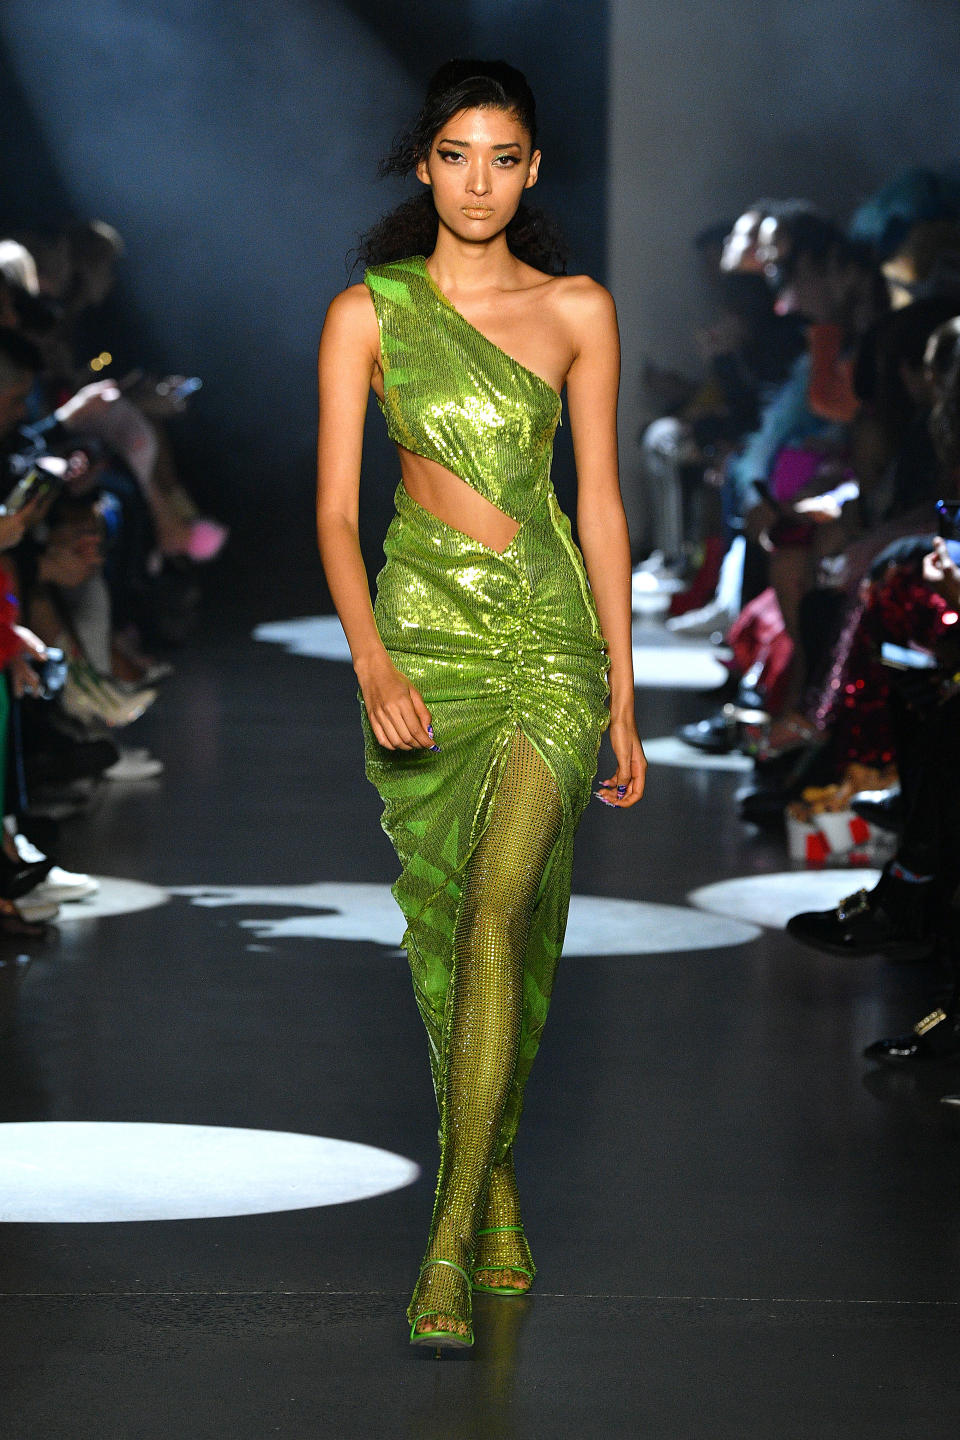 A model walks the runway during the Christian Cowan show at New York Fashion Week on Feb. 11.&nbsp;